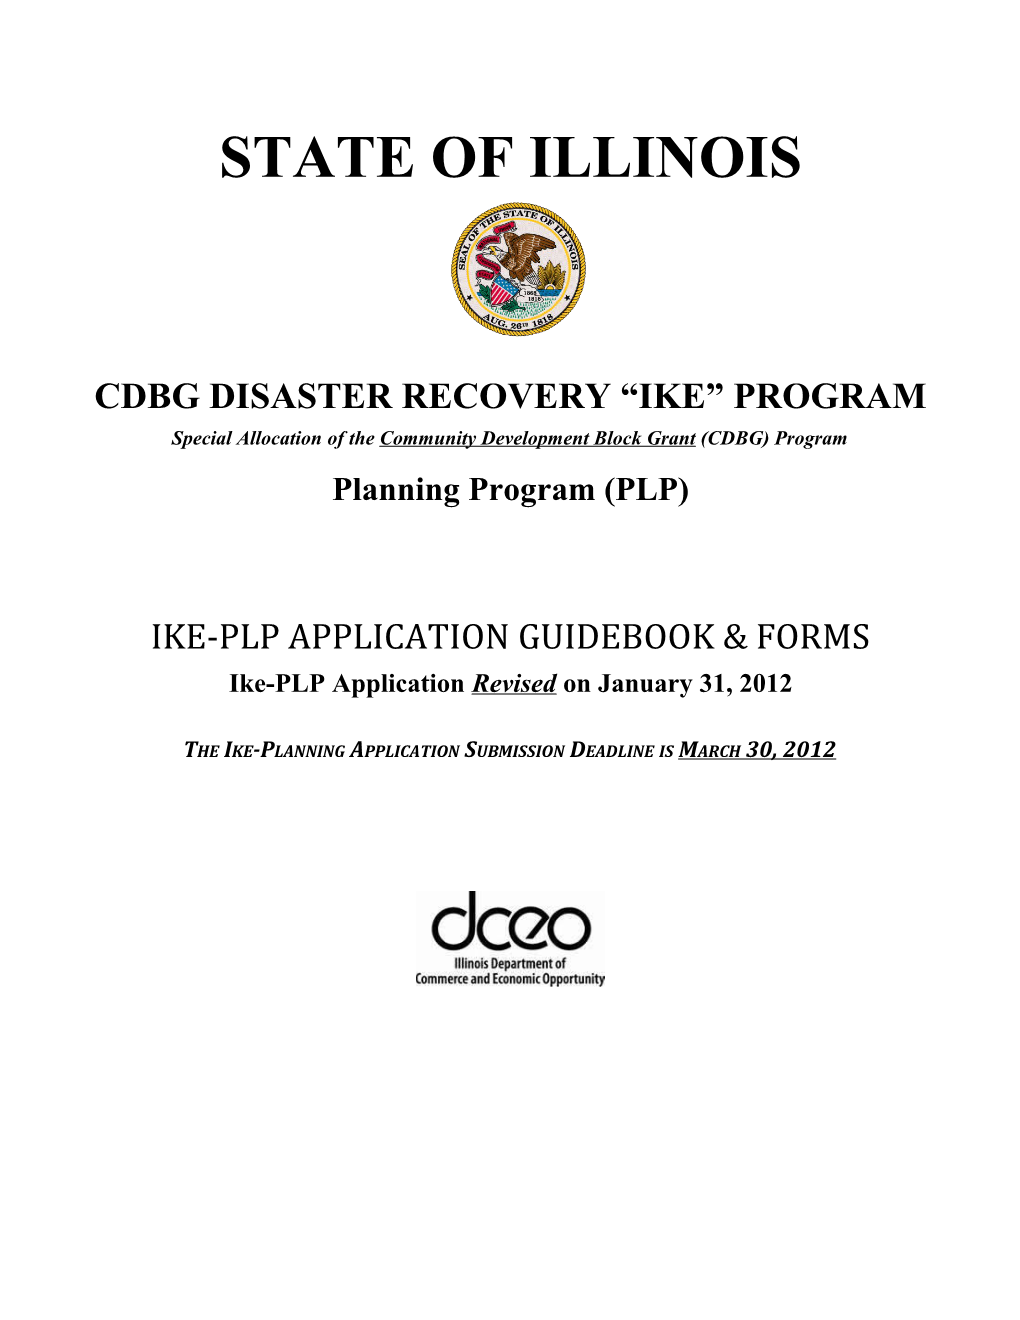 Cdbg Disaster Recovery Ike Program